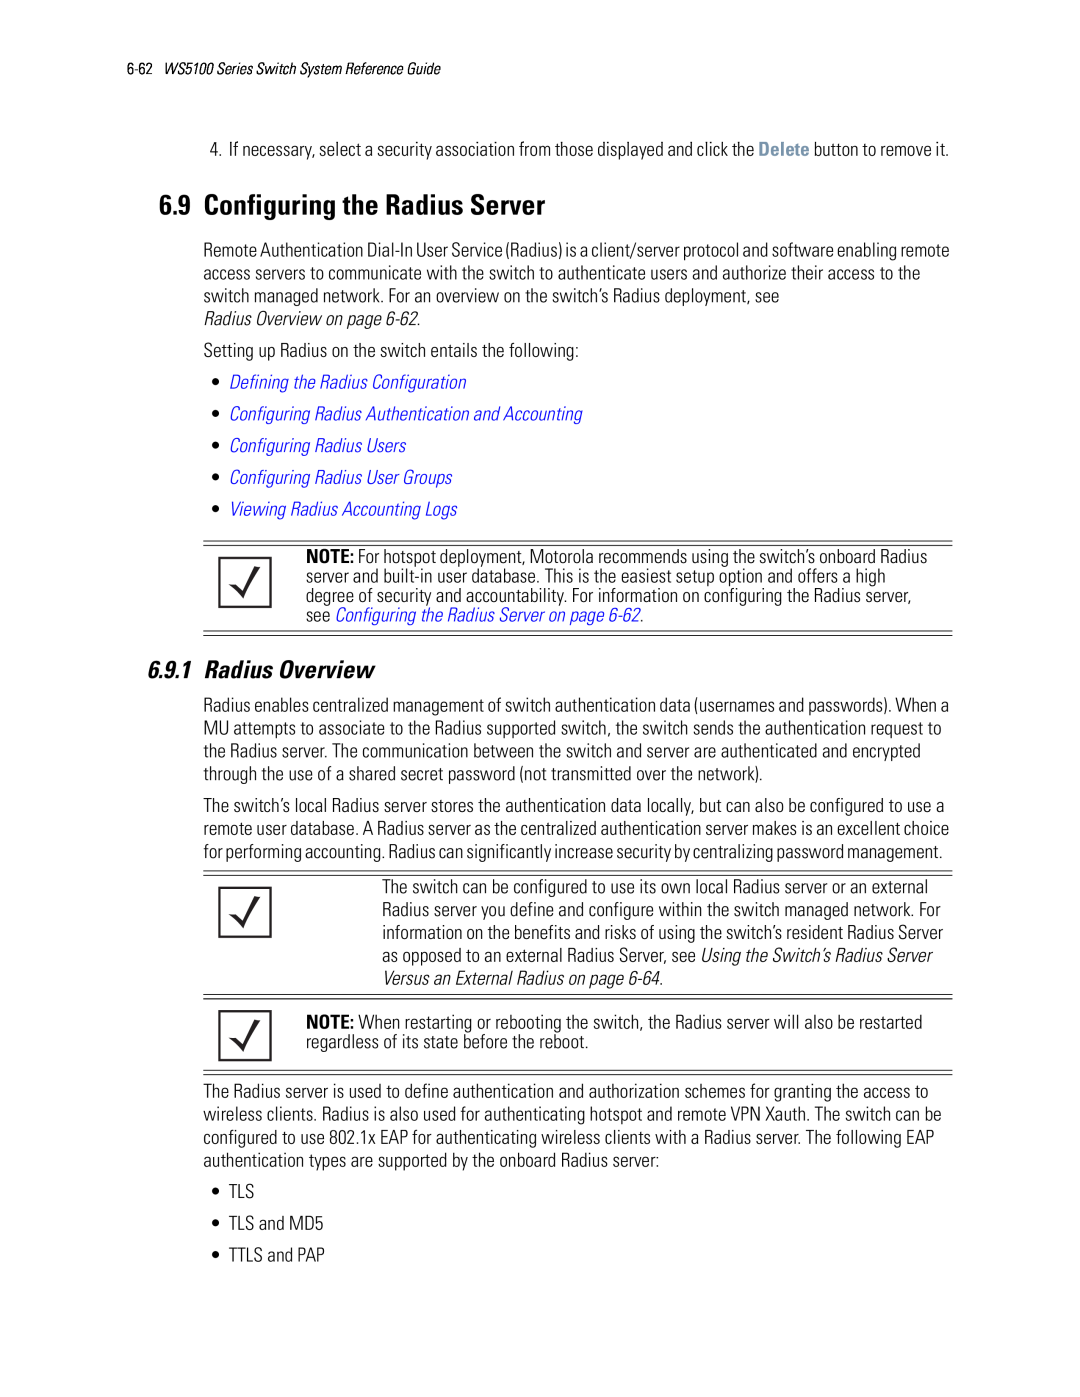 Motorola WS5100 manual 6.9Configuring the Radius Server, Radius Overview on page, •Defining the Radius Configuration 